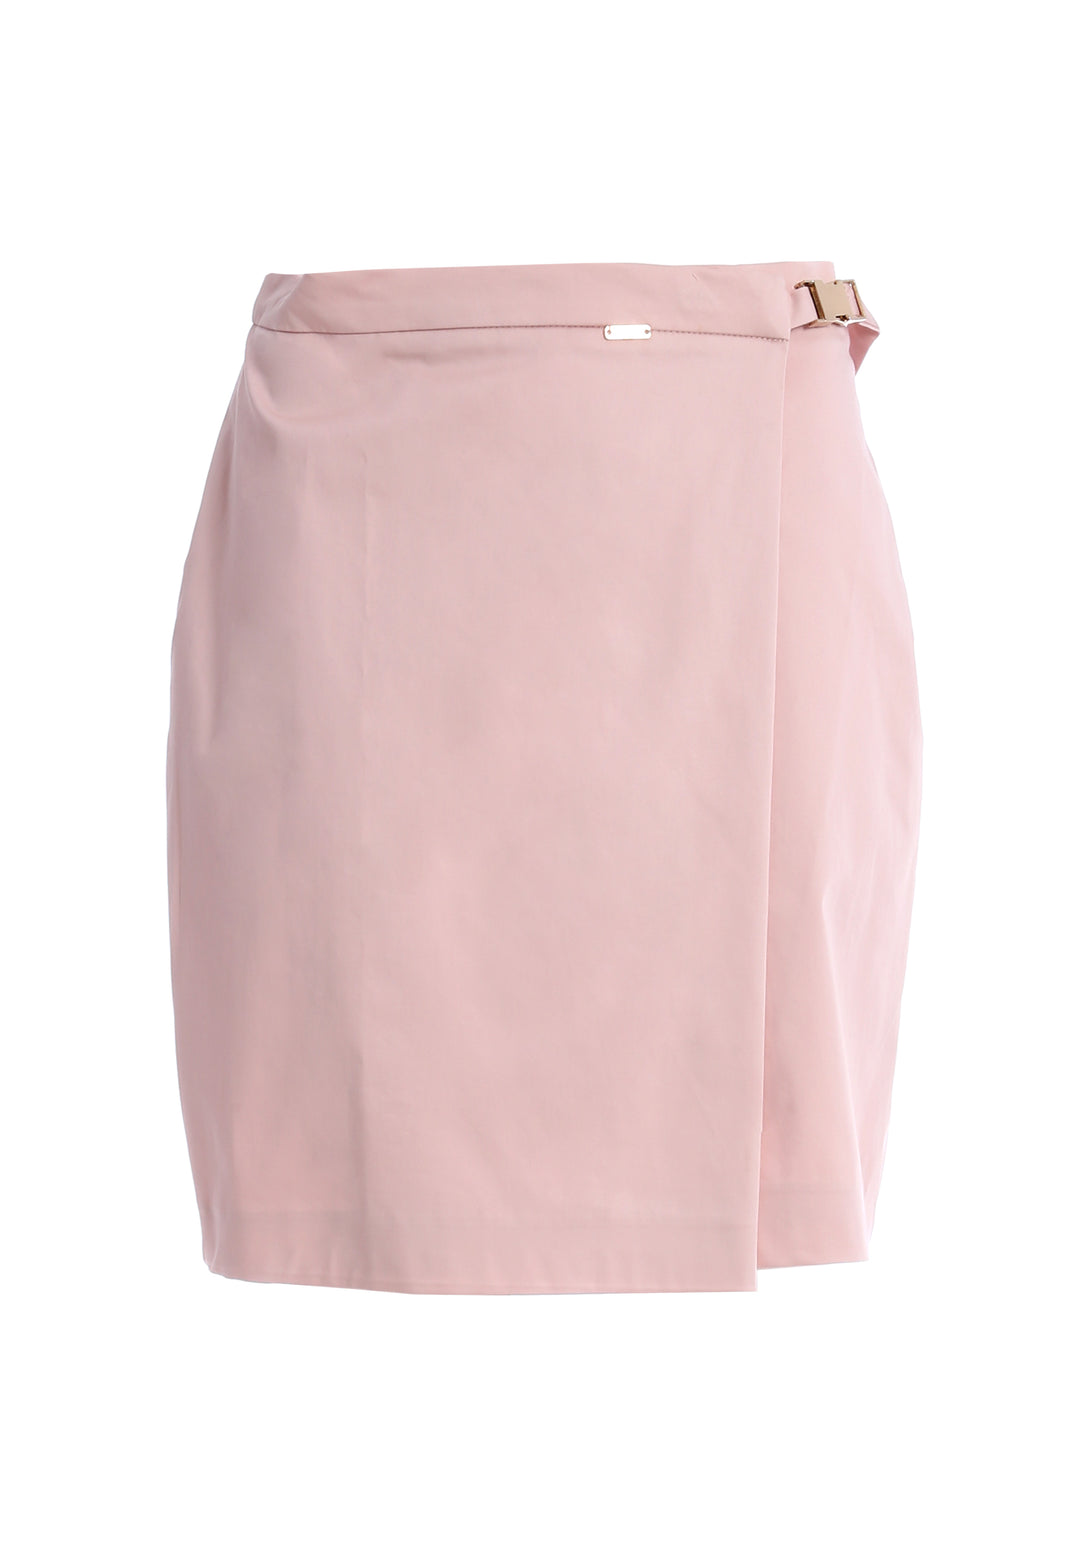 Mini skirt regular fit made in cotton